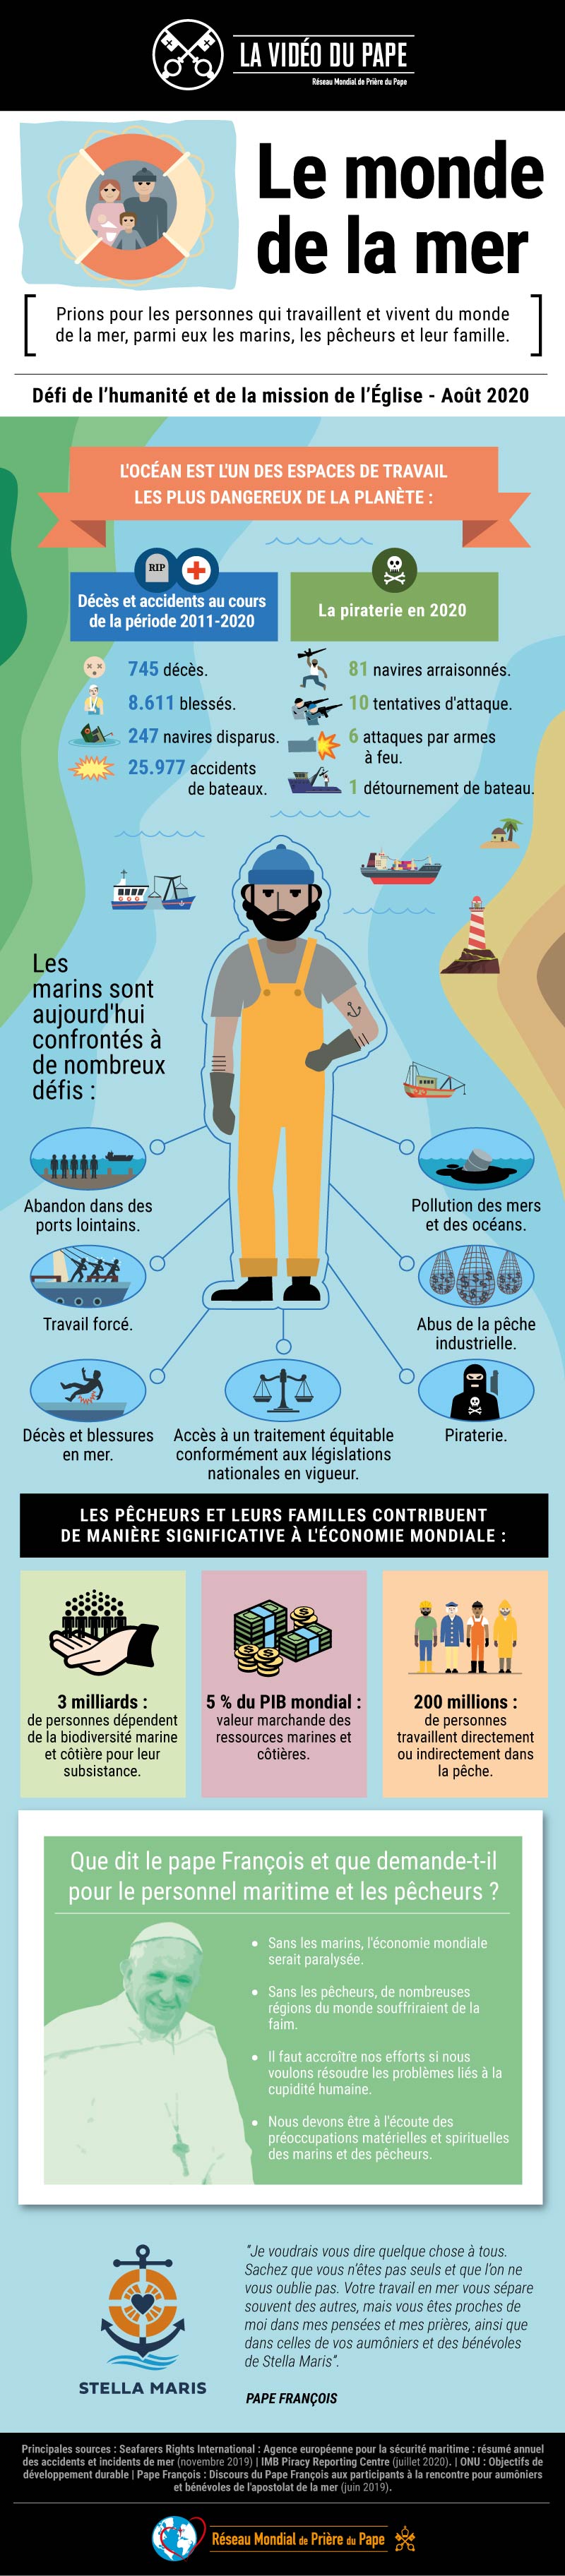 Infografia-TPV-8-2020-FR-La-Vidéo-du-Pape-Le-monde-de-la-mer.jpg